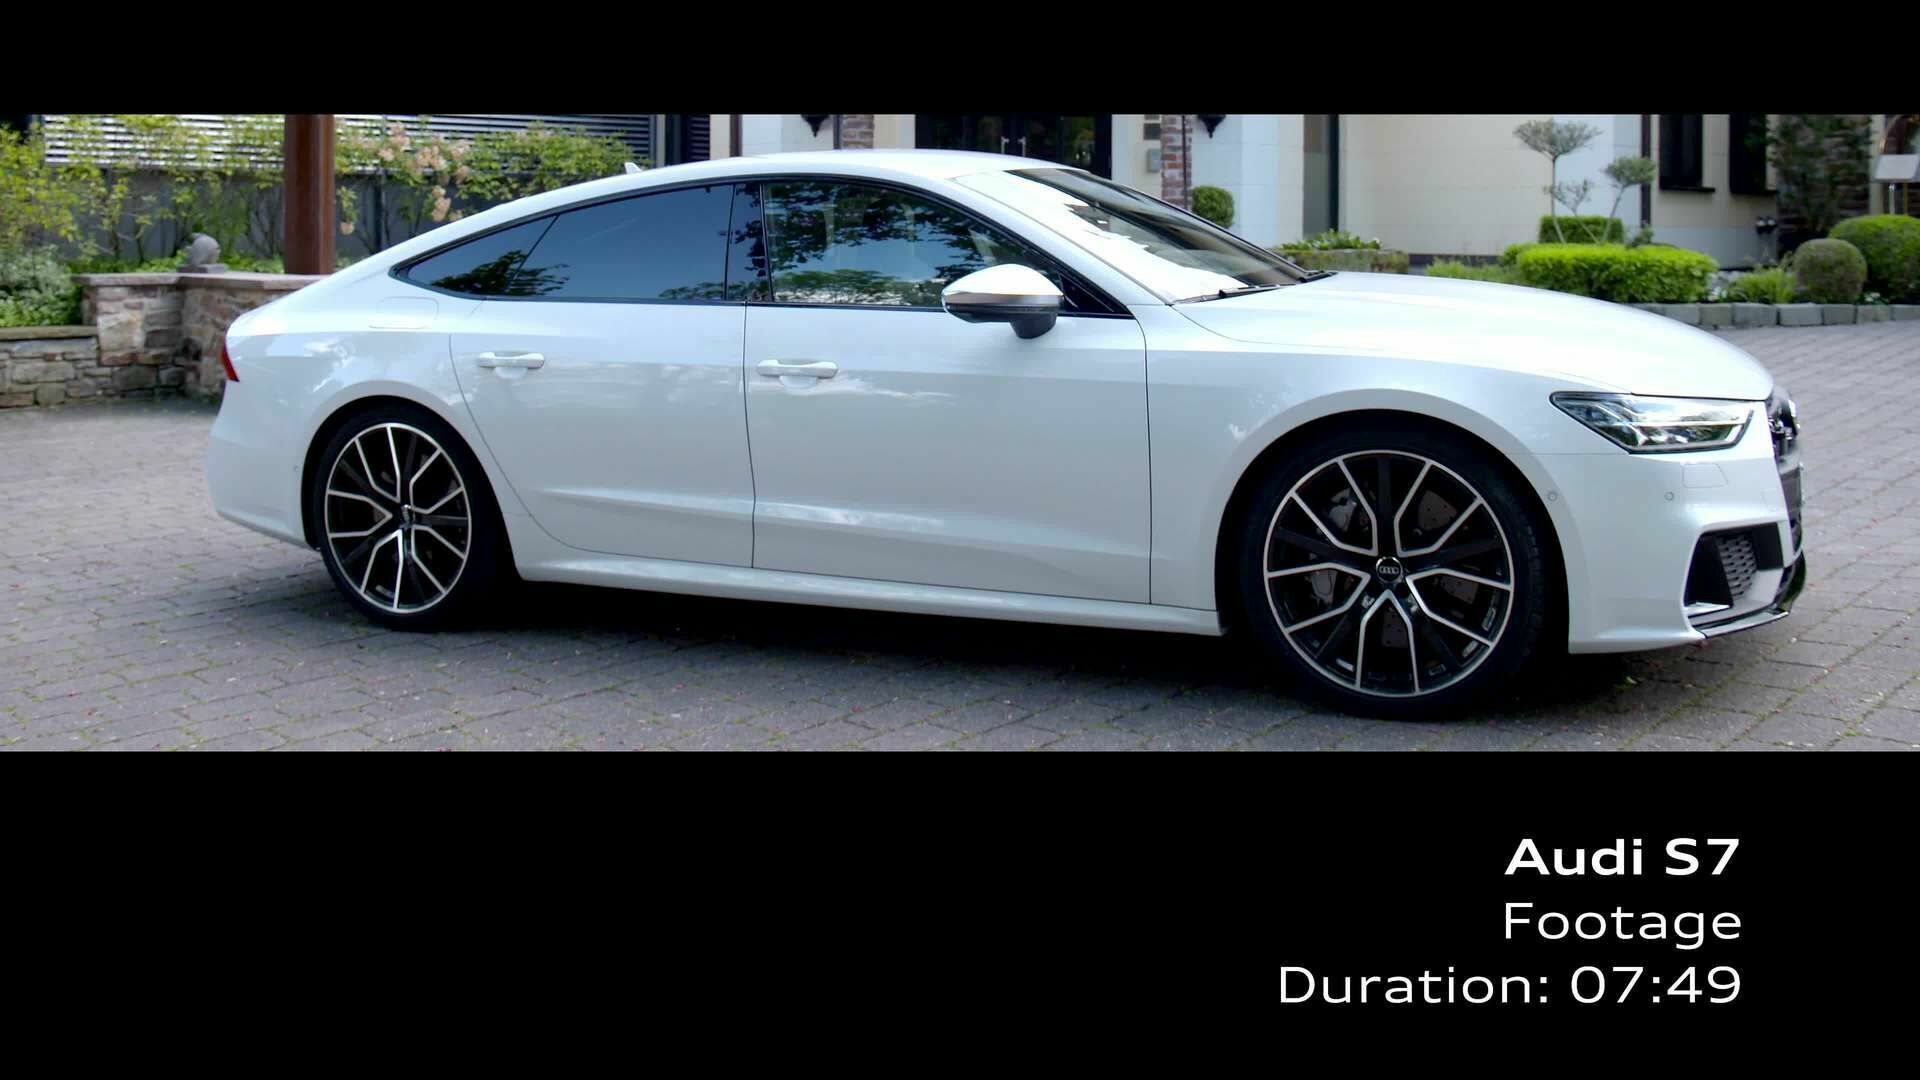 Audi S7 Sportback (Footage)